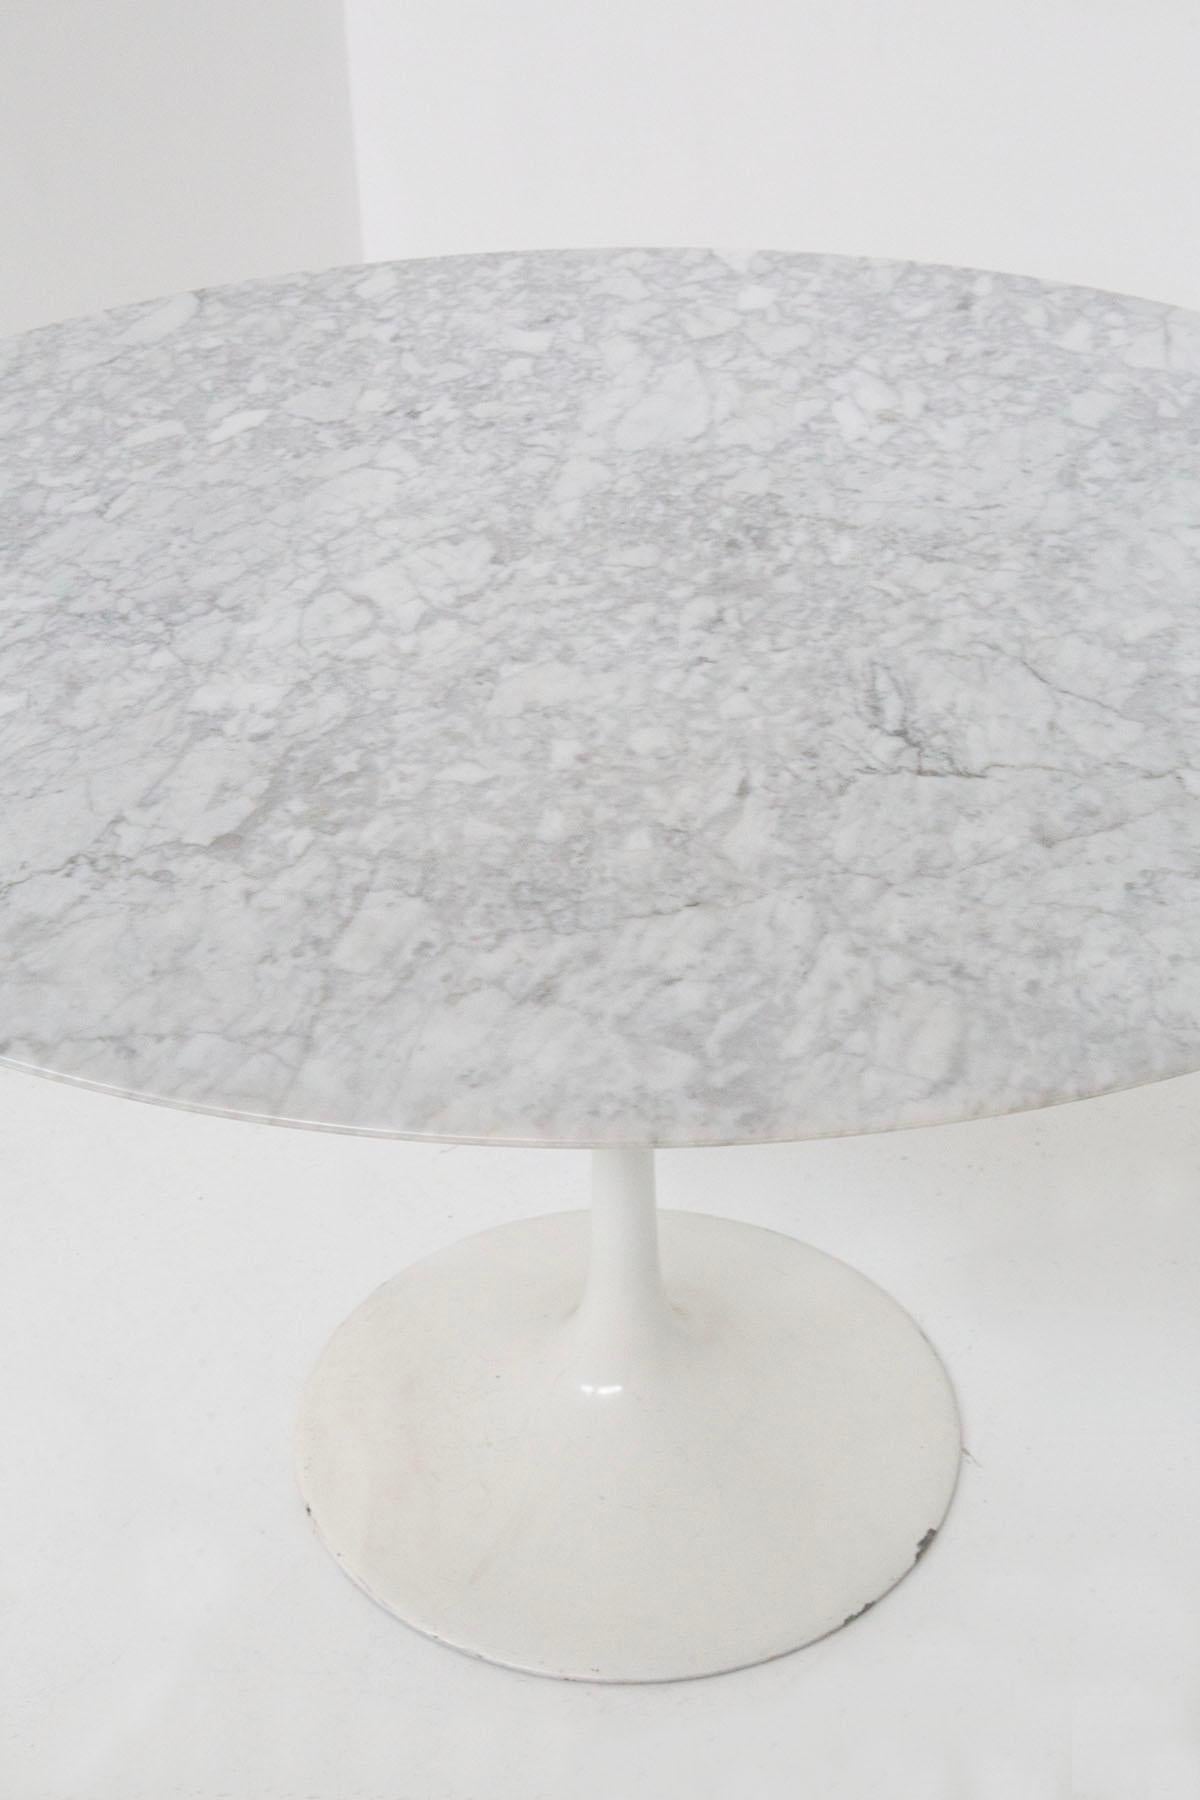 Eero Saarinen Round Table in White Marble For Sale 4